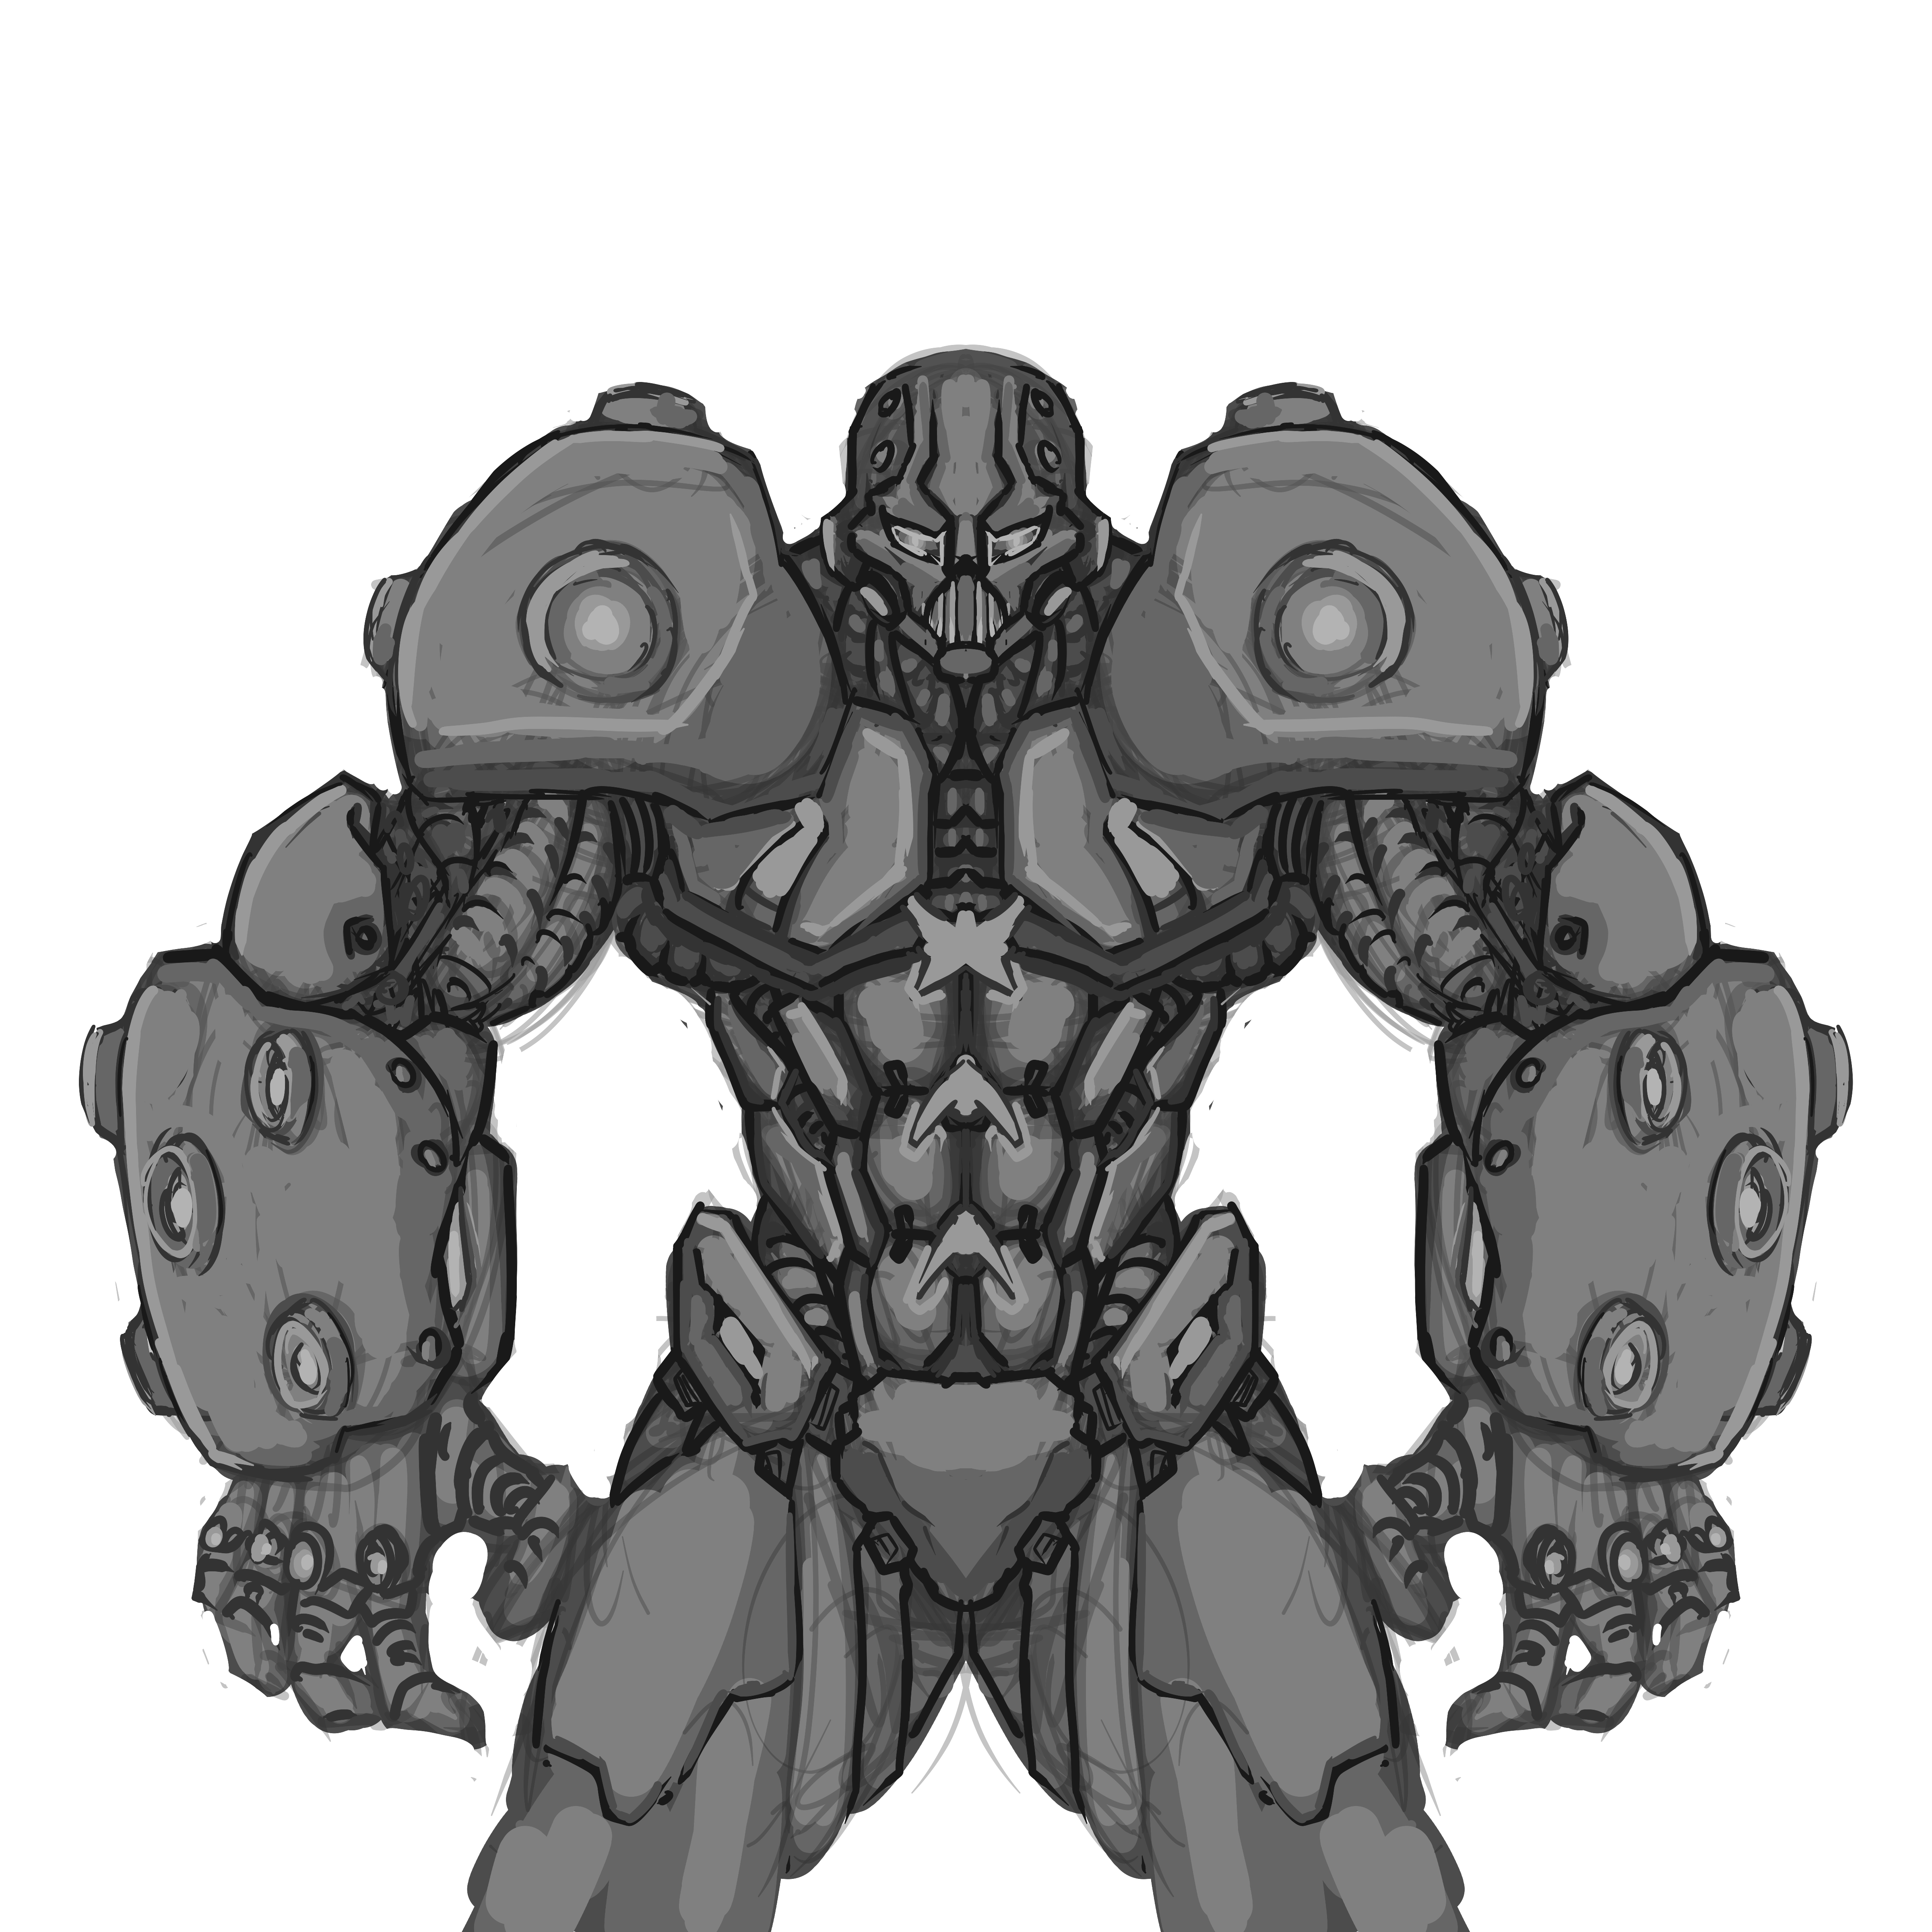 an intimidating robot warrior